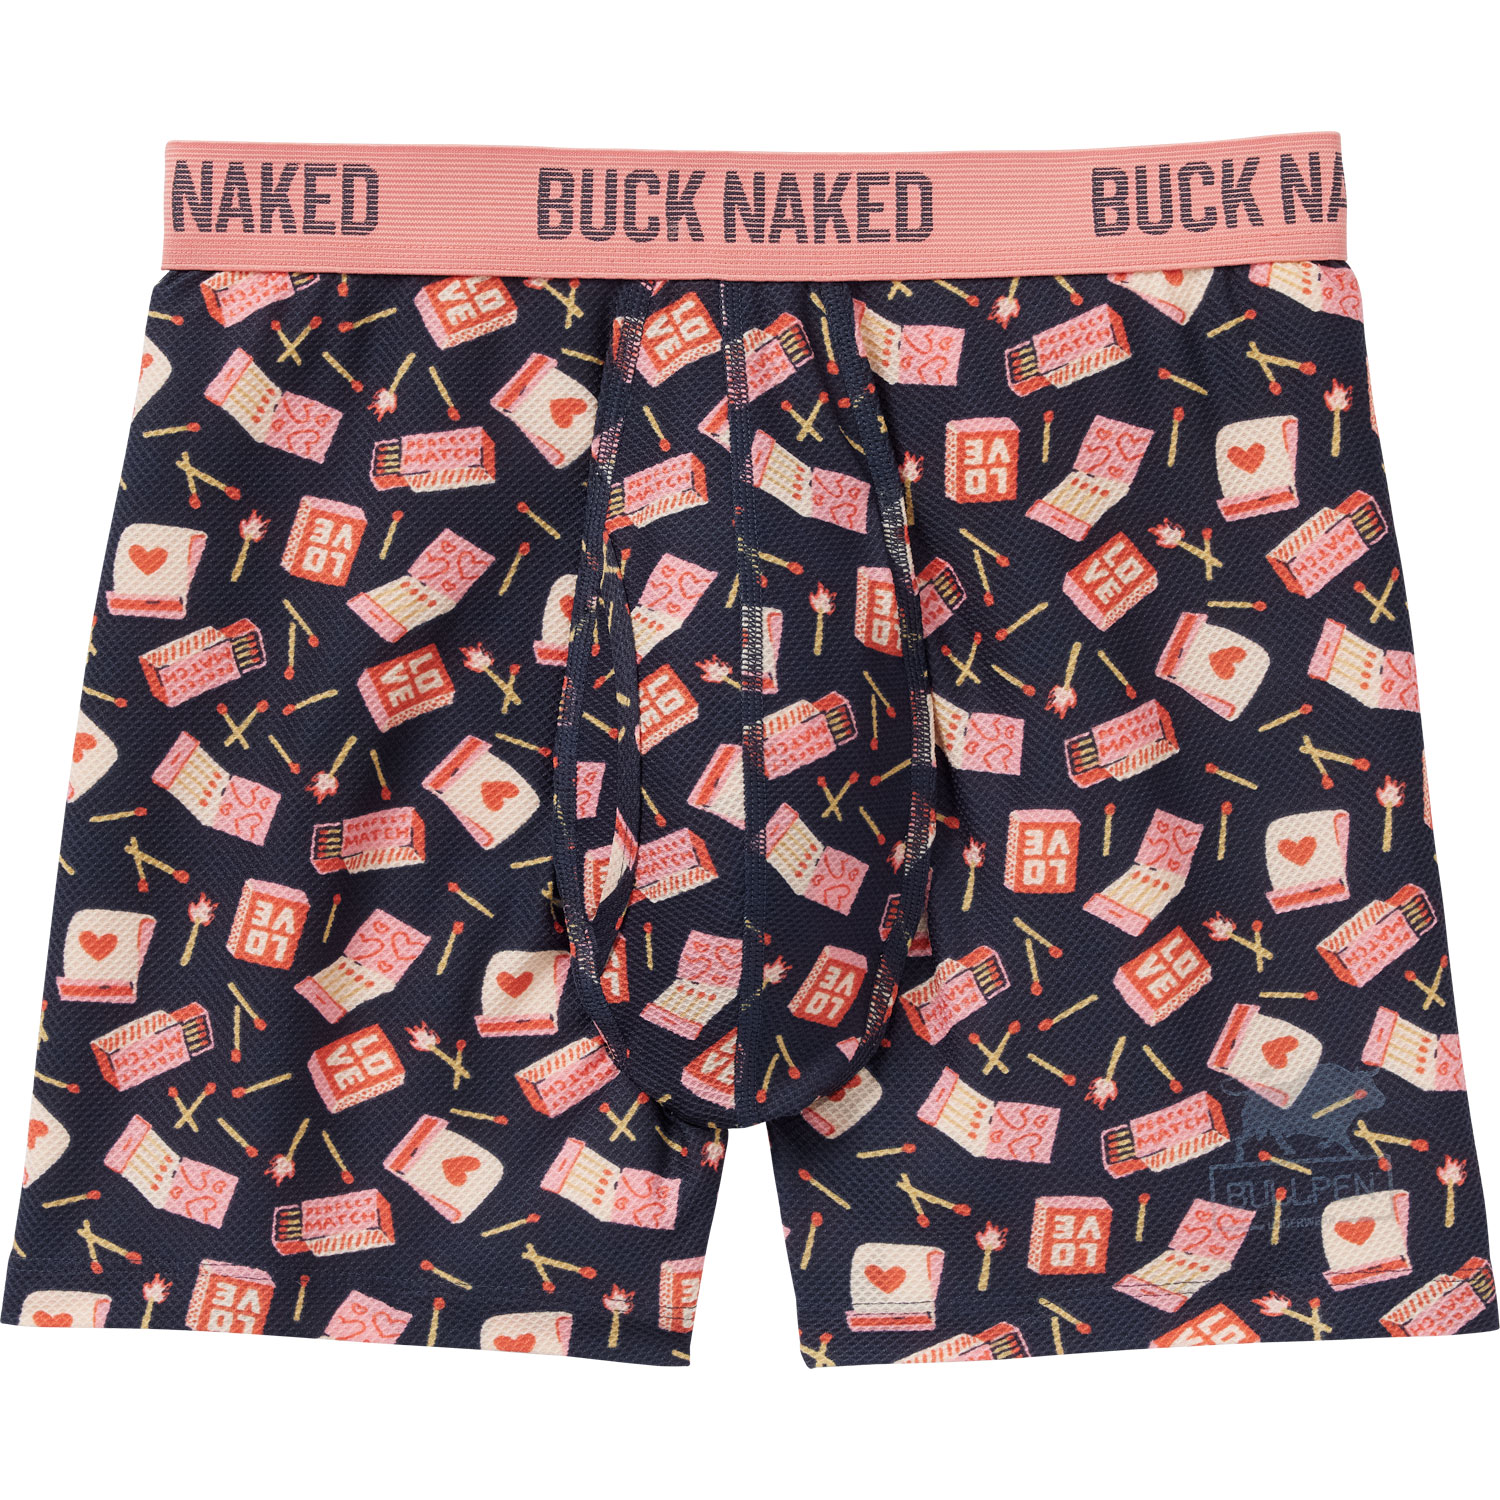 Duluth Trading Company Buck Naked Underwear TV Spot, 'Underwear